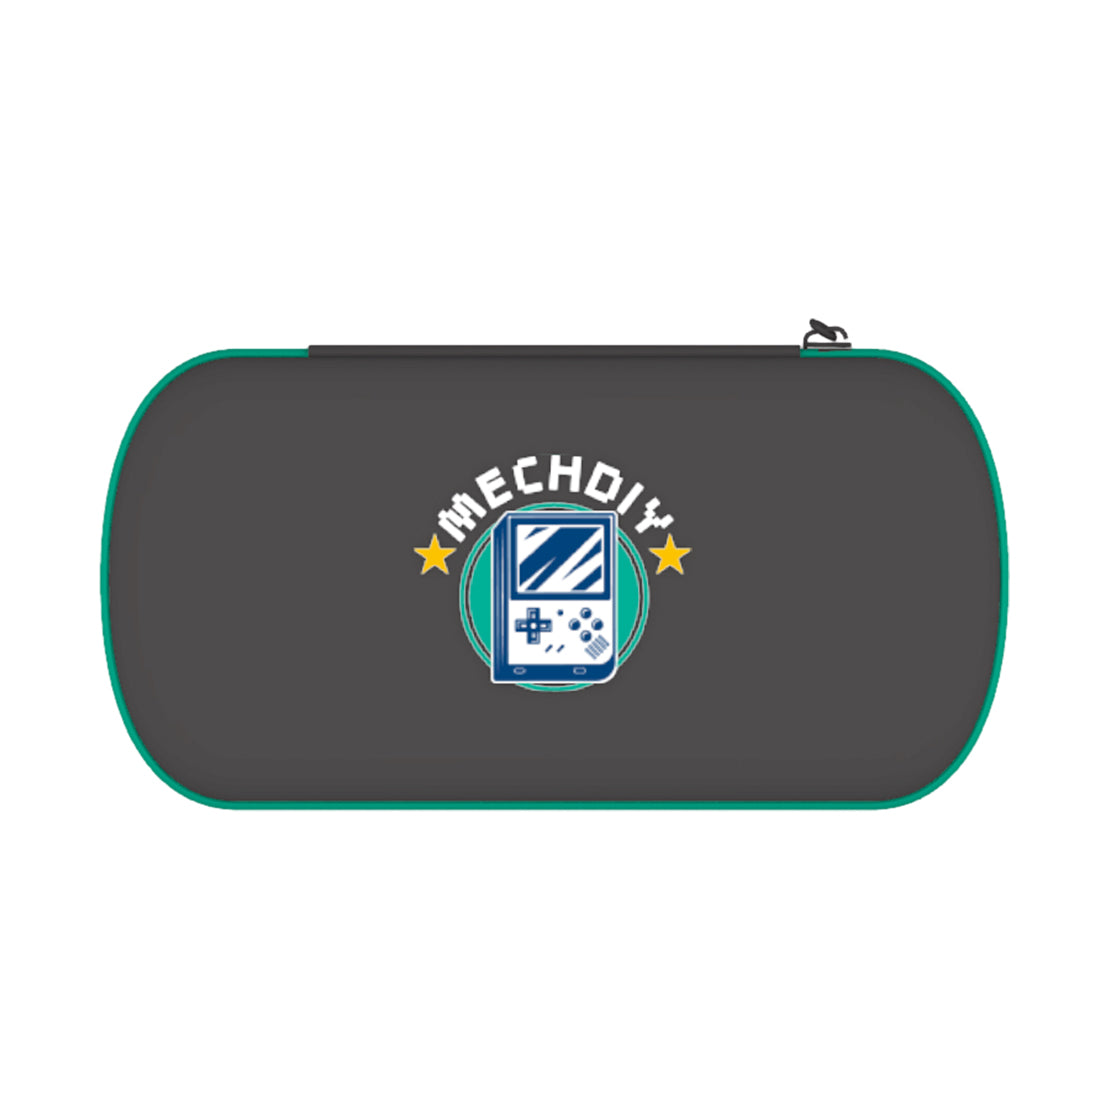 Mechdiy Customized Horizontal Storage Bag - Mechdiy